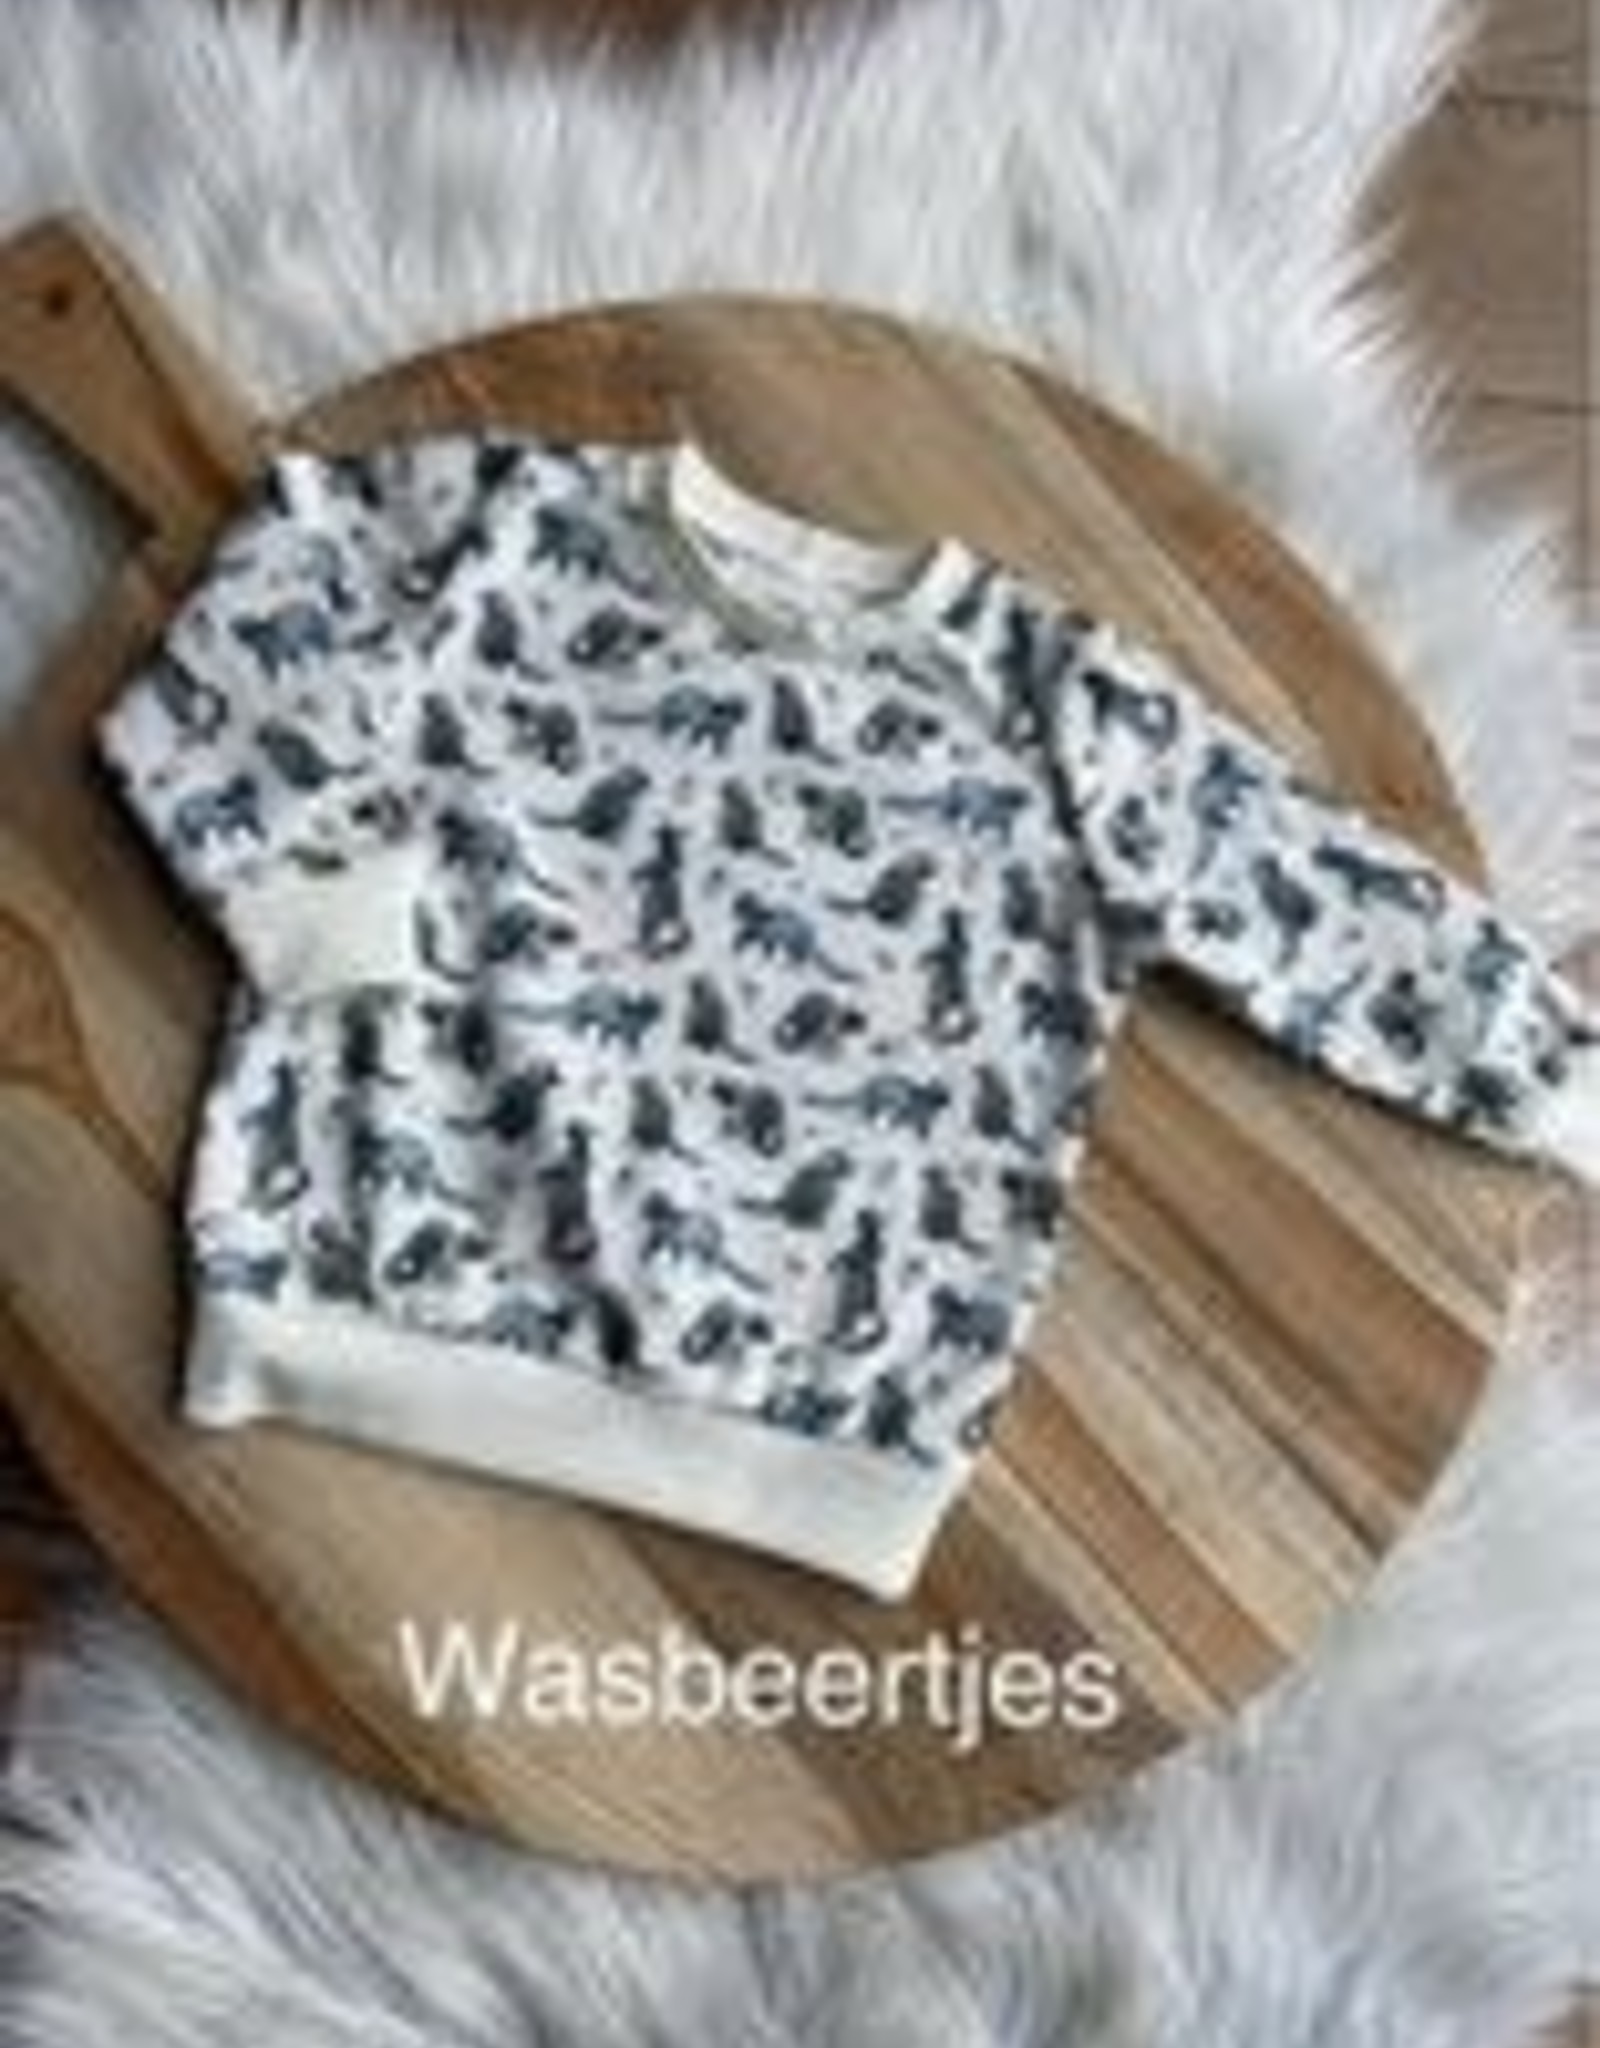 Stik-Stof Sweatshirt Wasbeertjes 62